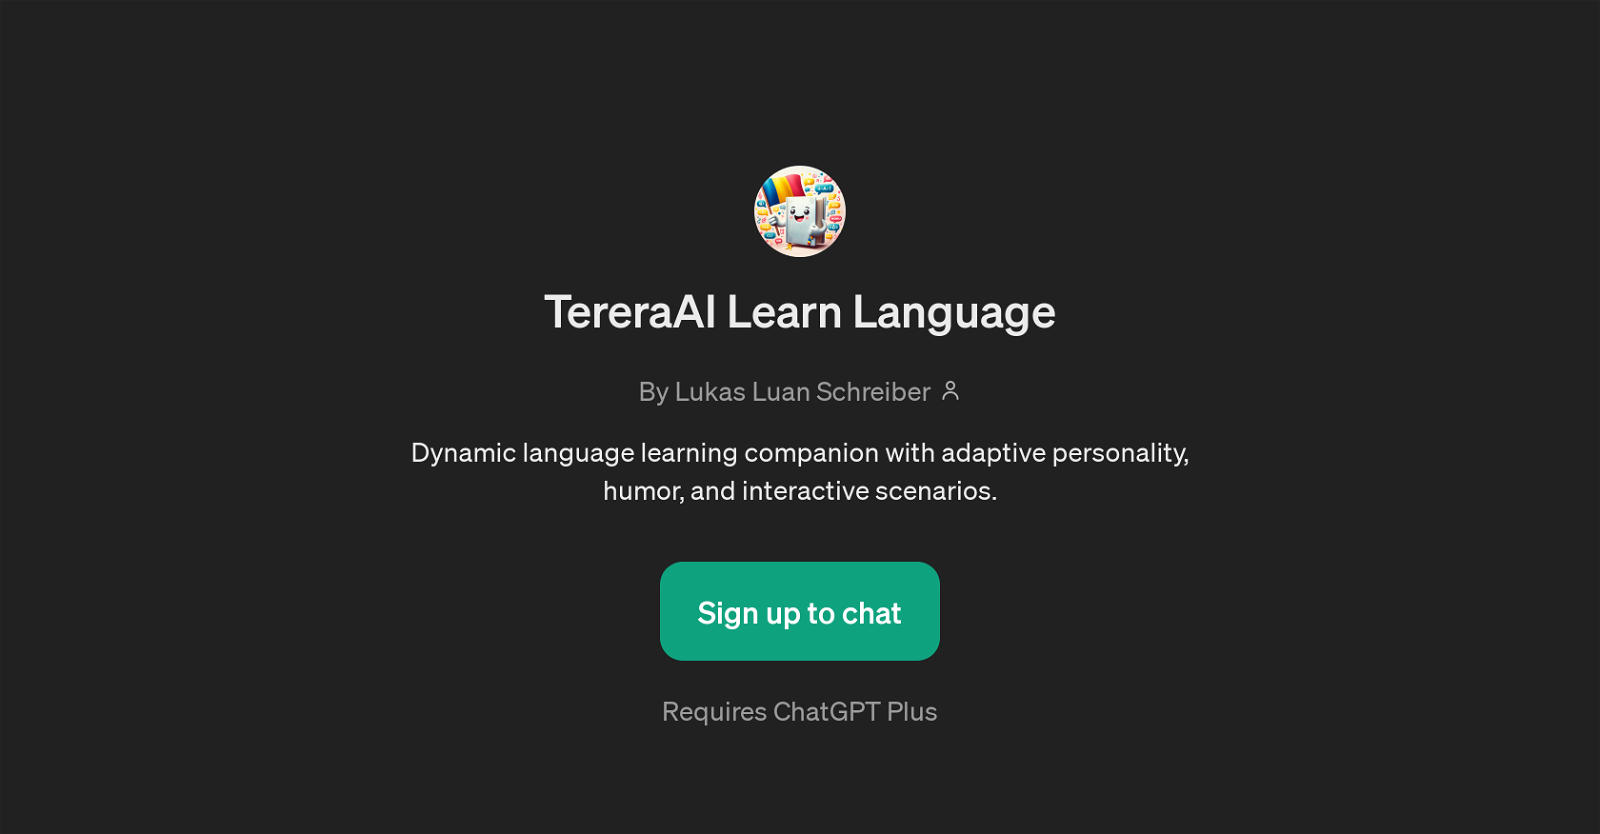 TereraAI Learn Language website